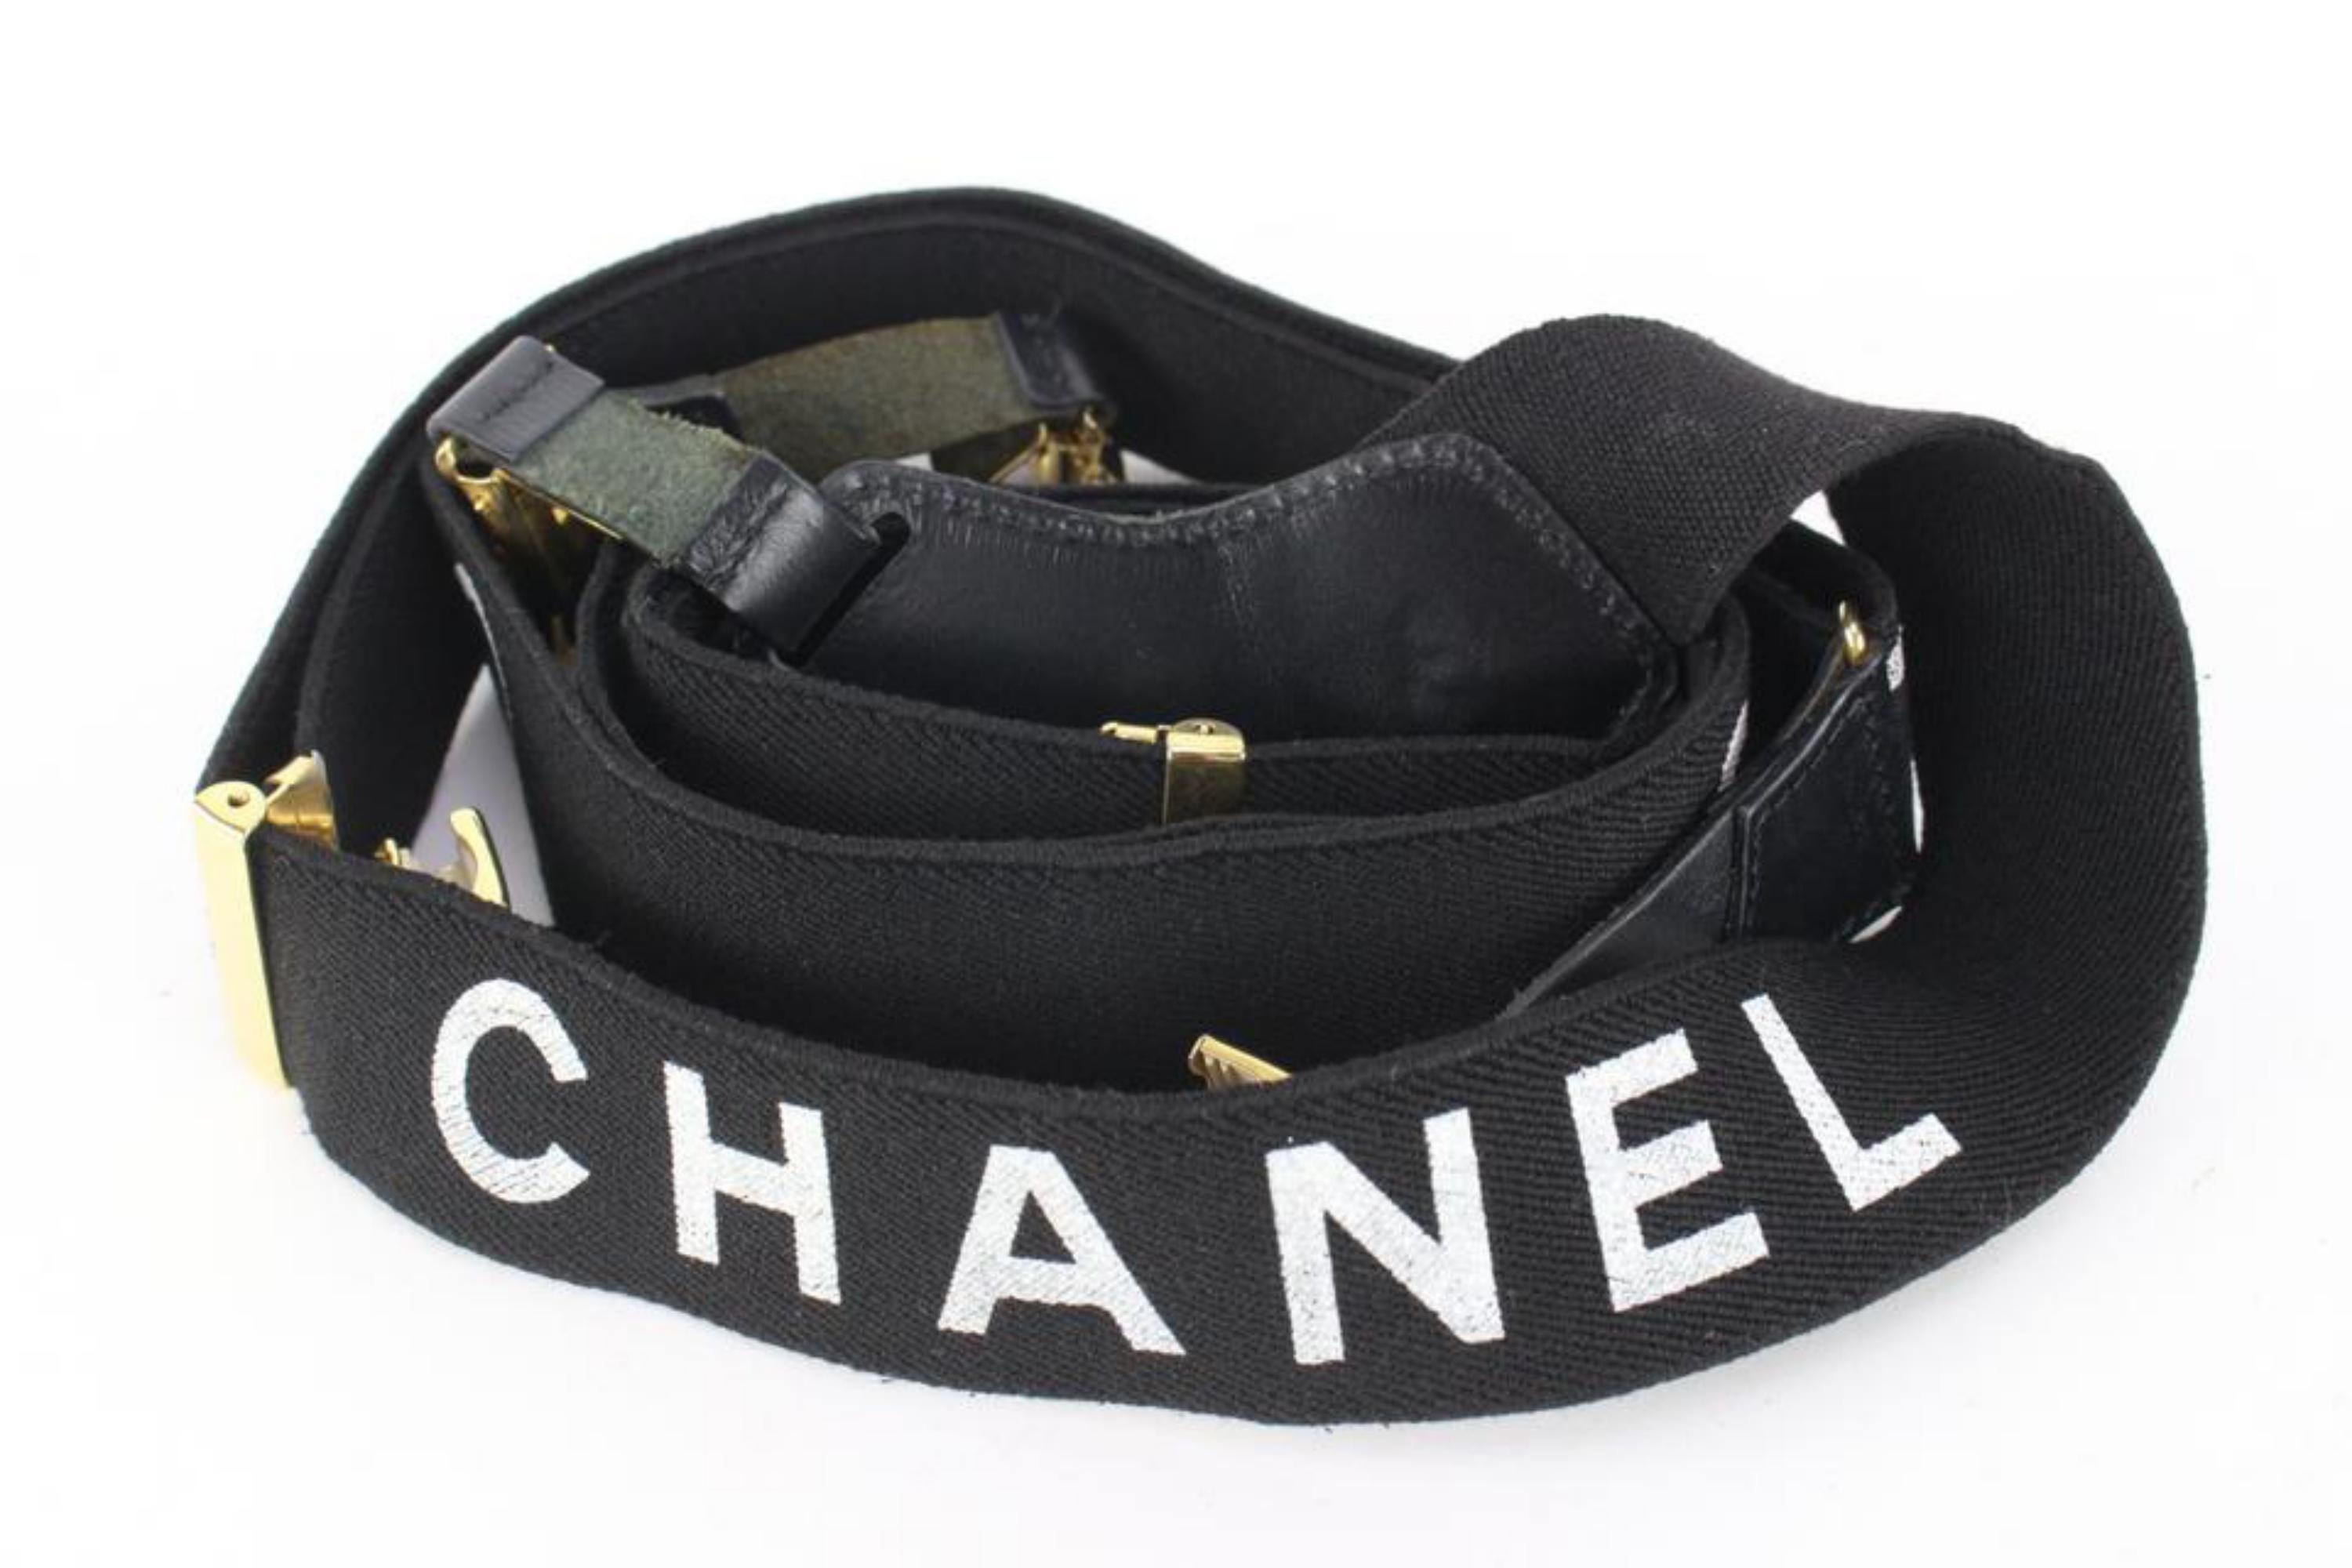 Chanel Runway Rare Vintage Black x White Suspenders 14cz510s at